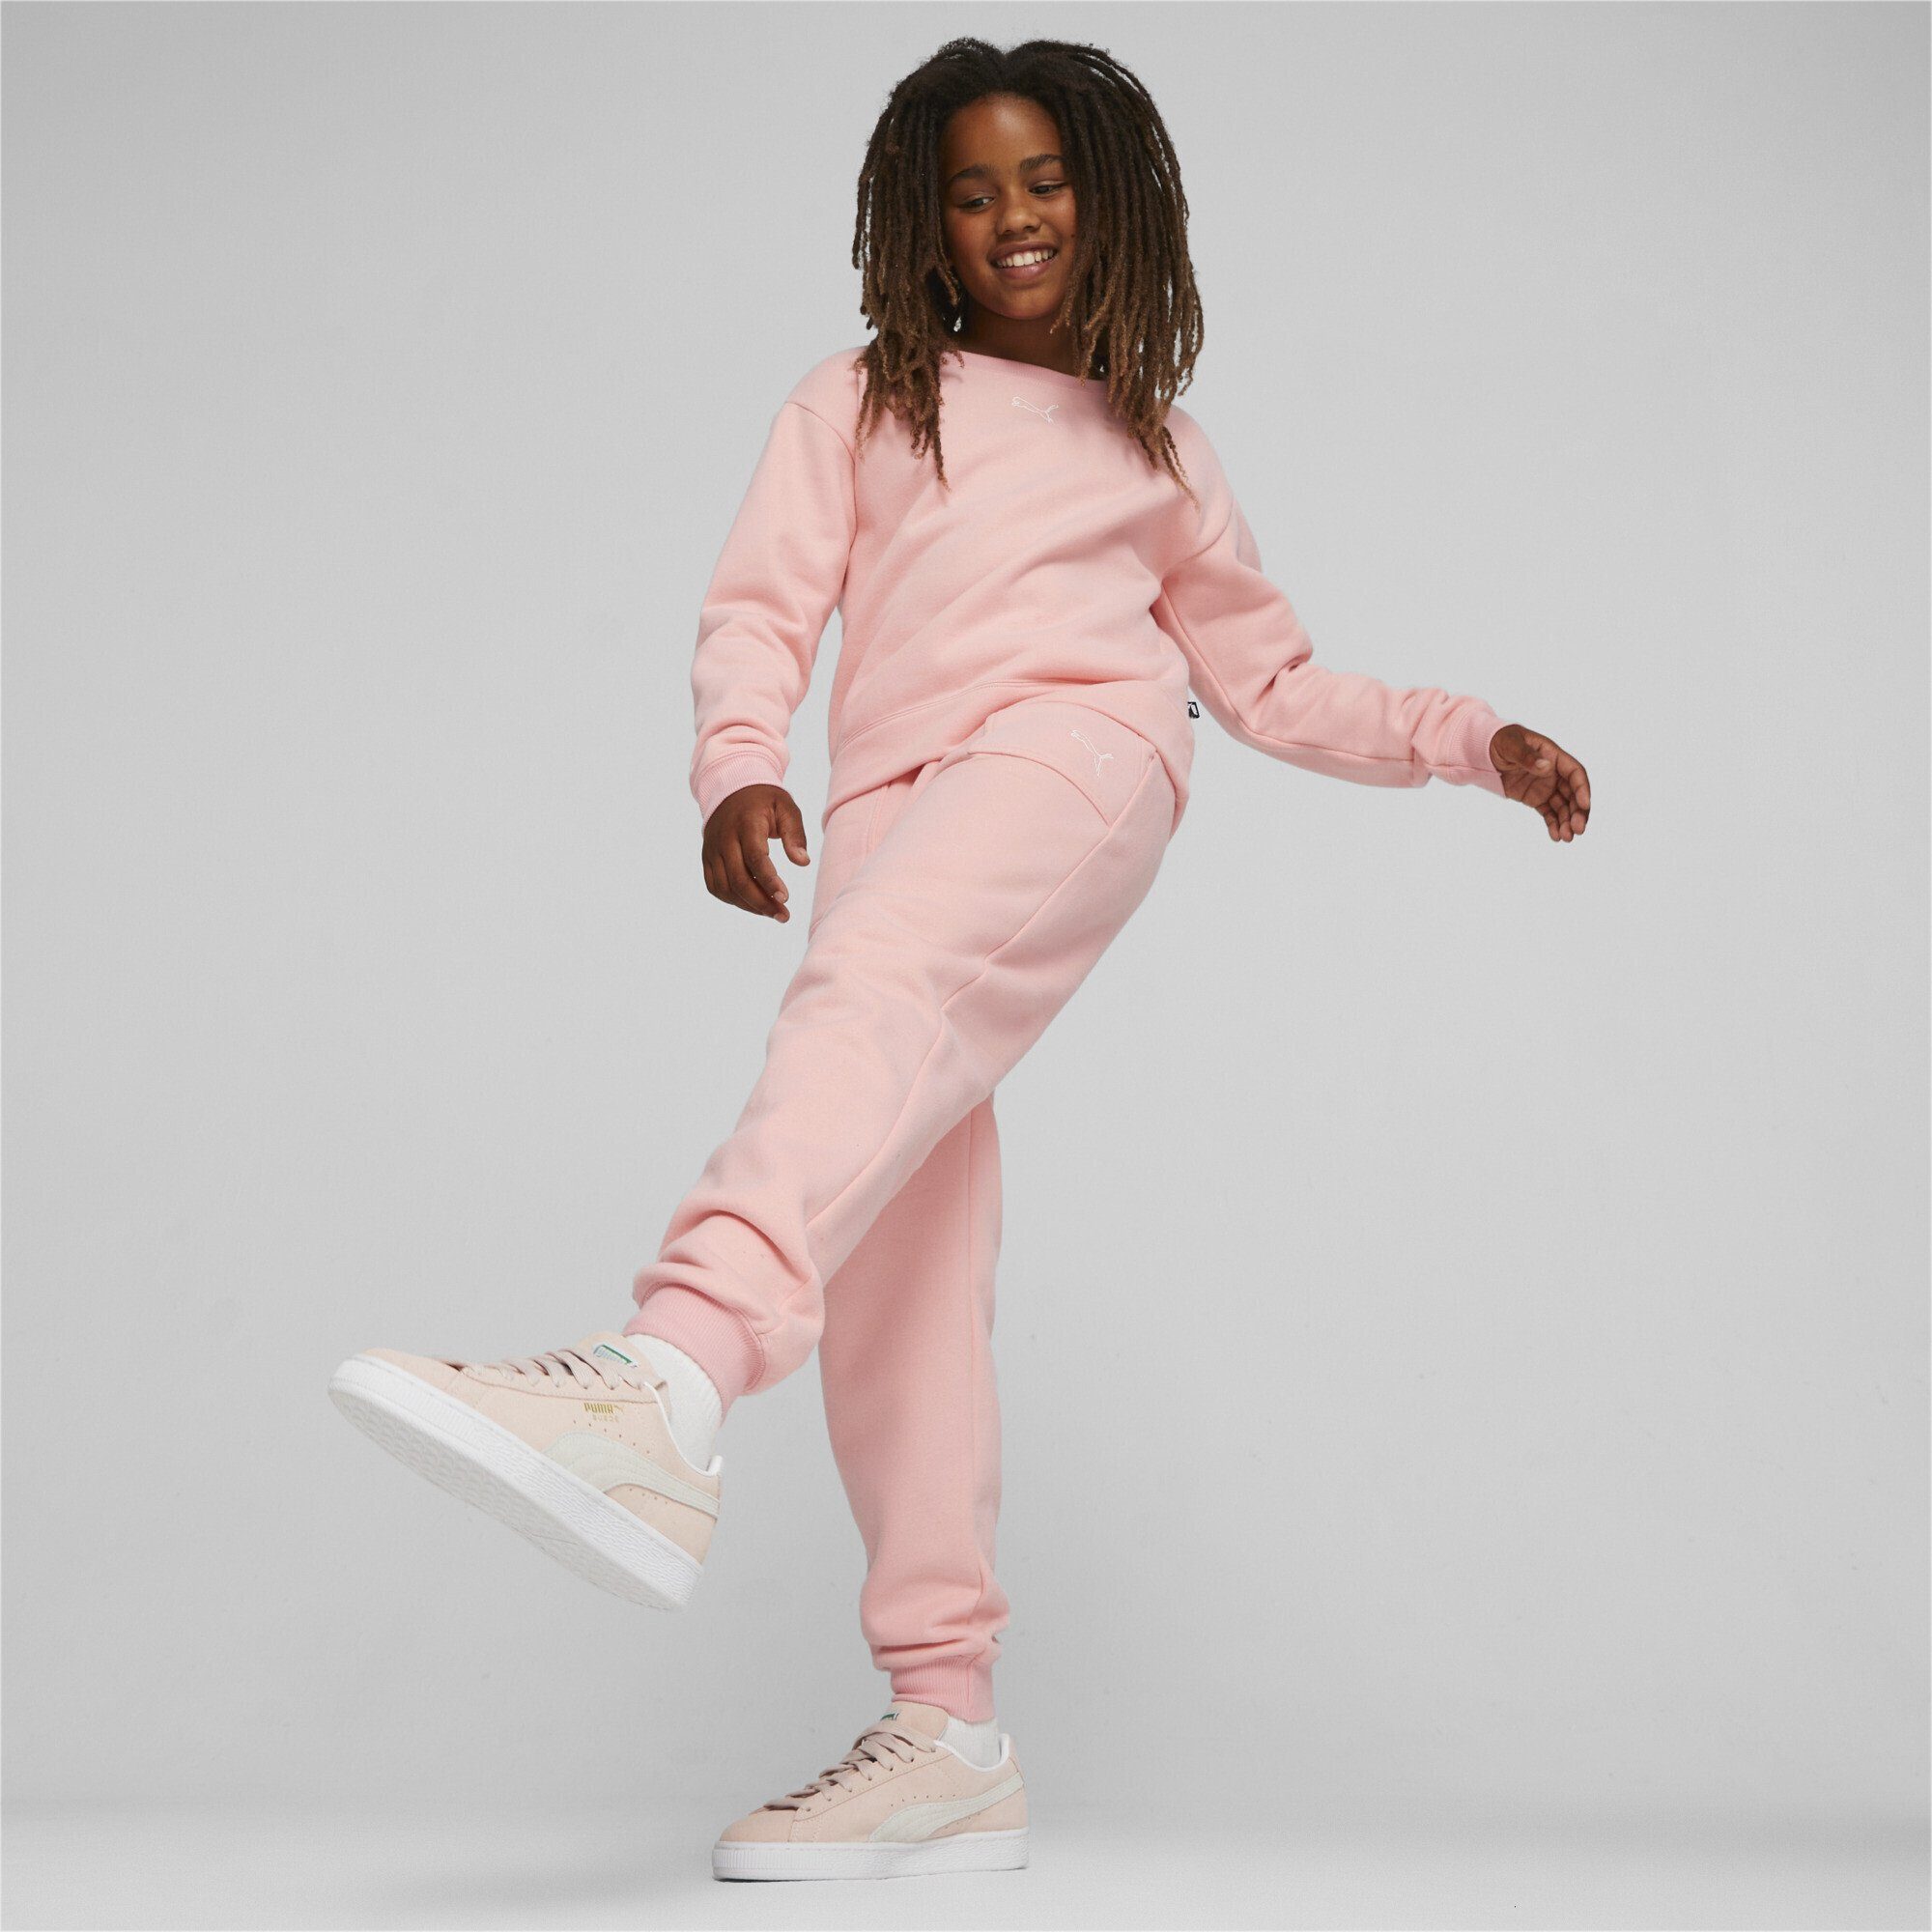 PUMA Jogginganzug Pink Anzug Loungewear Peach Smoothie Mädchen